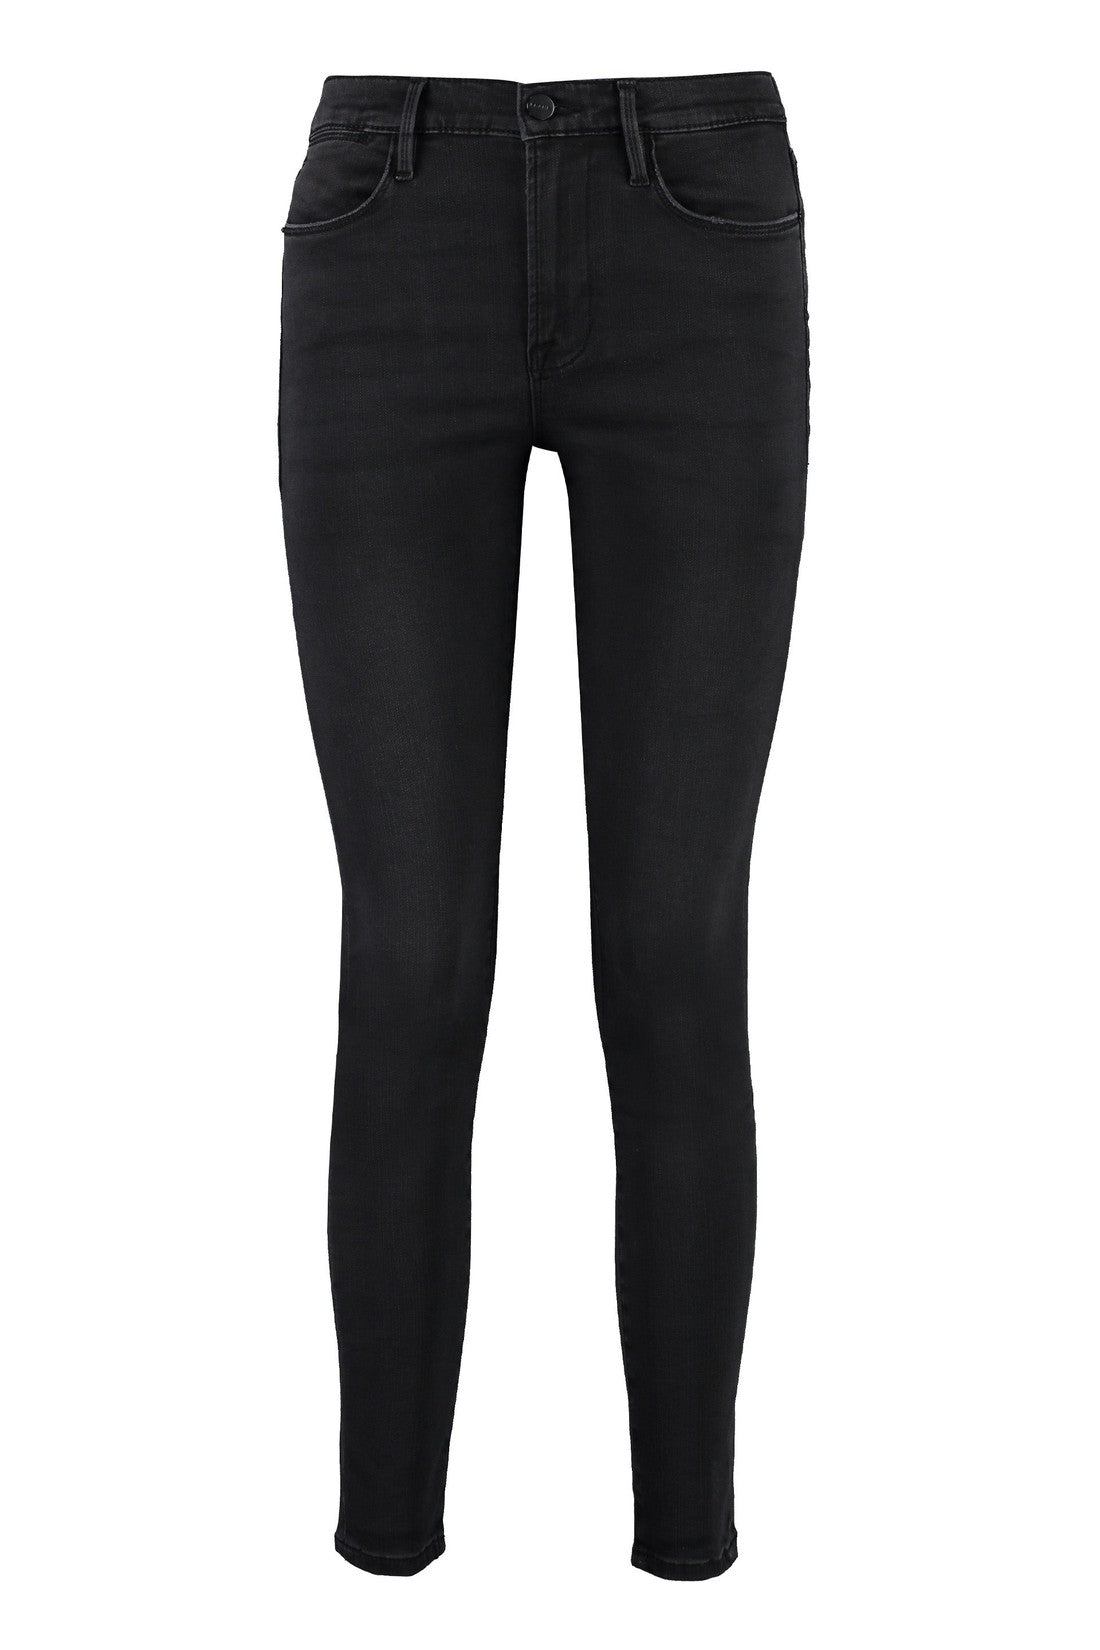 Frame-OUTLET-SALE-High-rise skinny jeans-ARCHIVIST